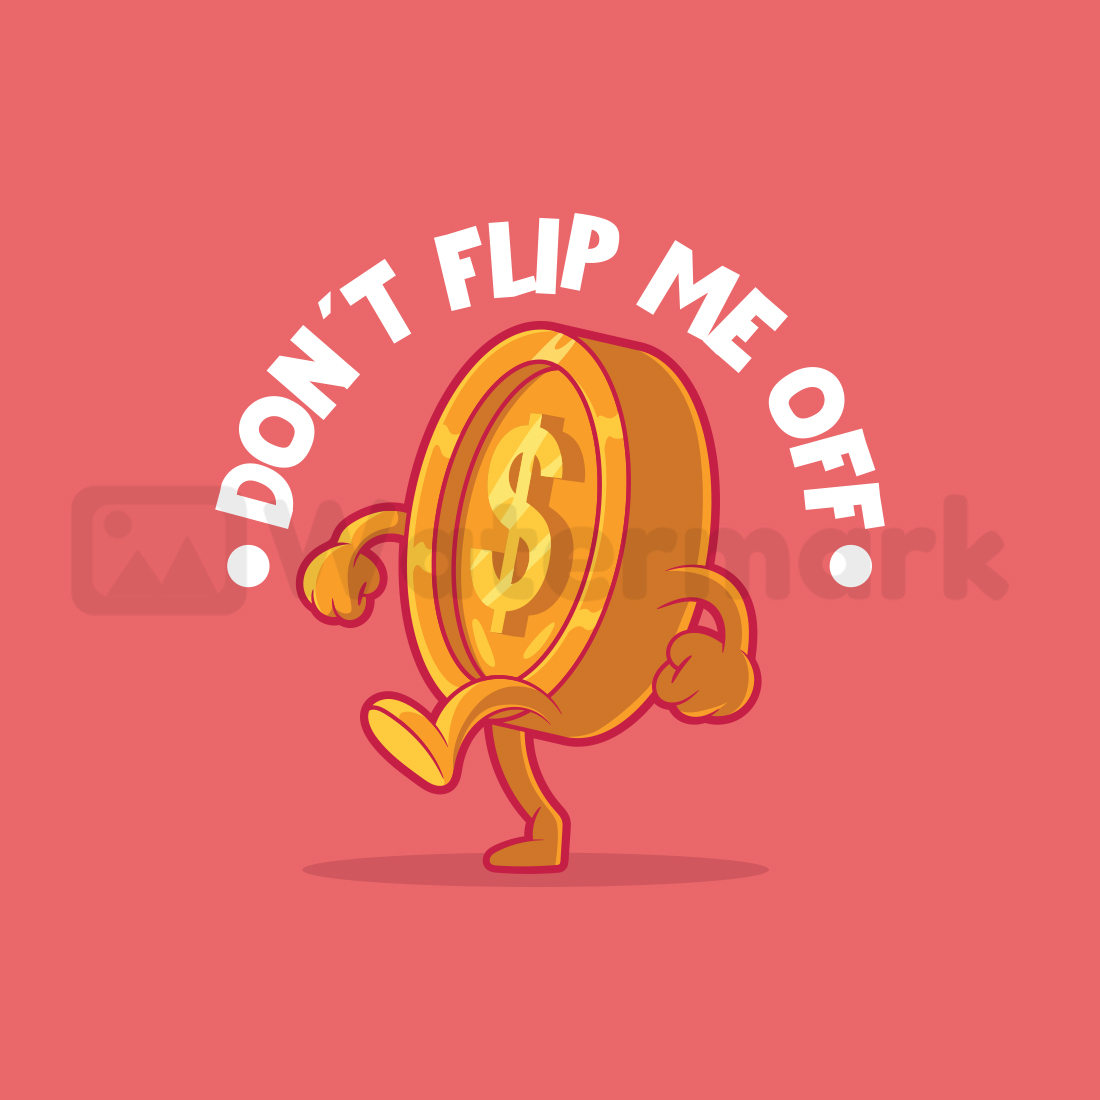 Don´t Flip Me! cover image.